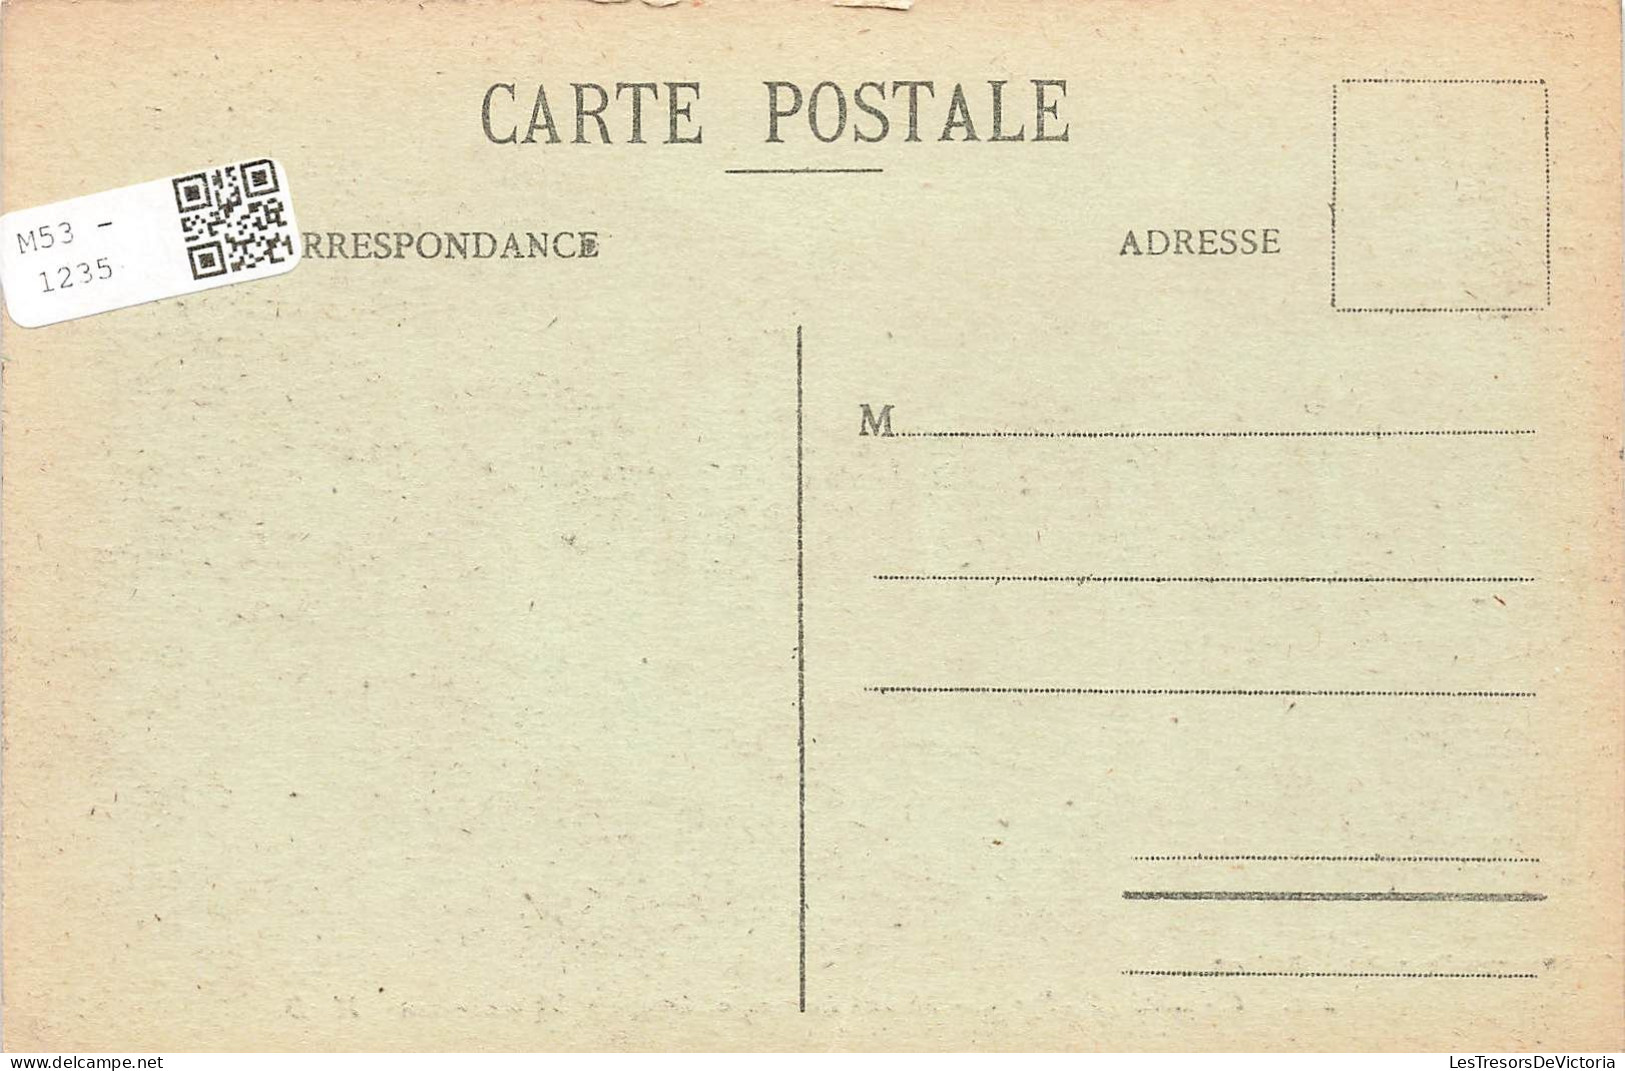 FRANCE - Cambo (B Pyr) - Vue Sur La Maison Rostand à Arnaga - Rhododendron - M D - Carte Postale Ancienne - Cambo-les-Bains